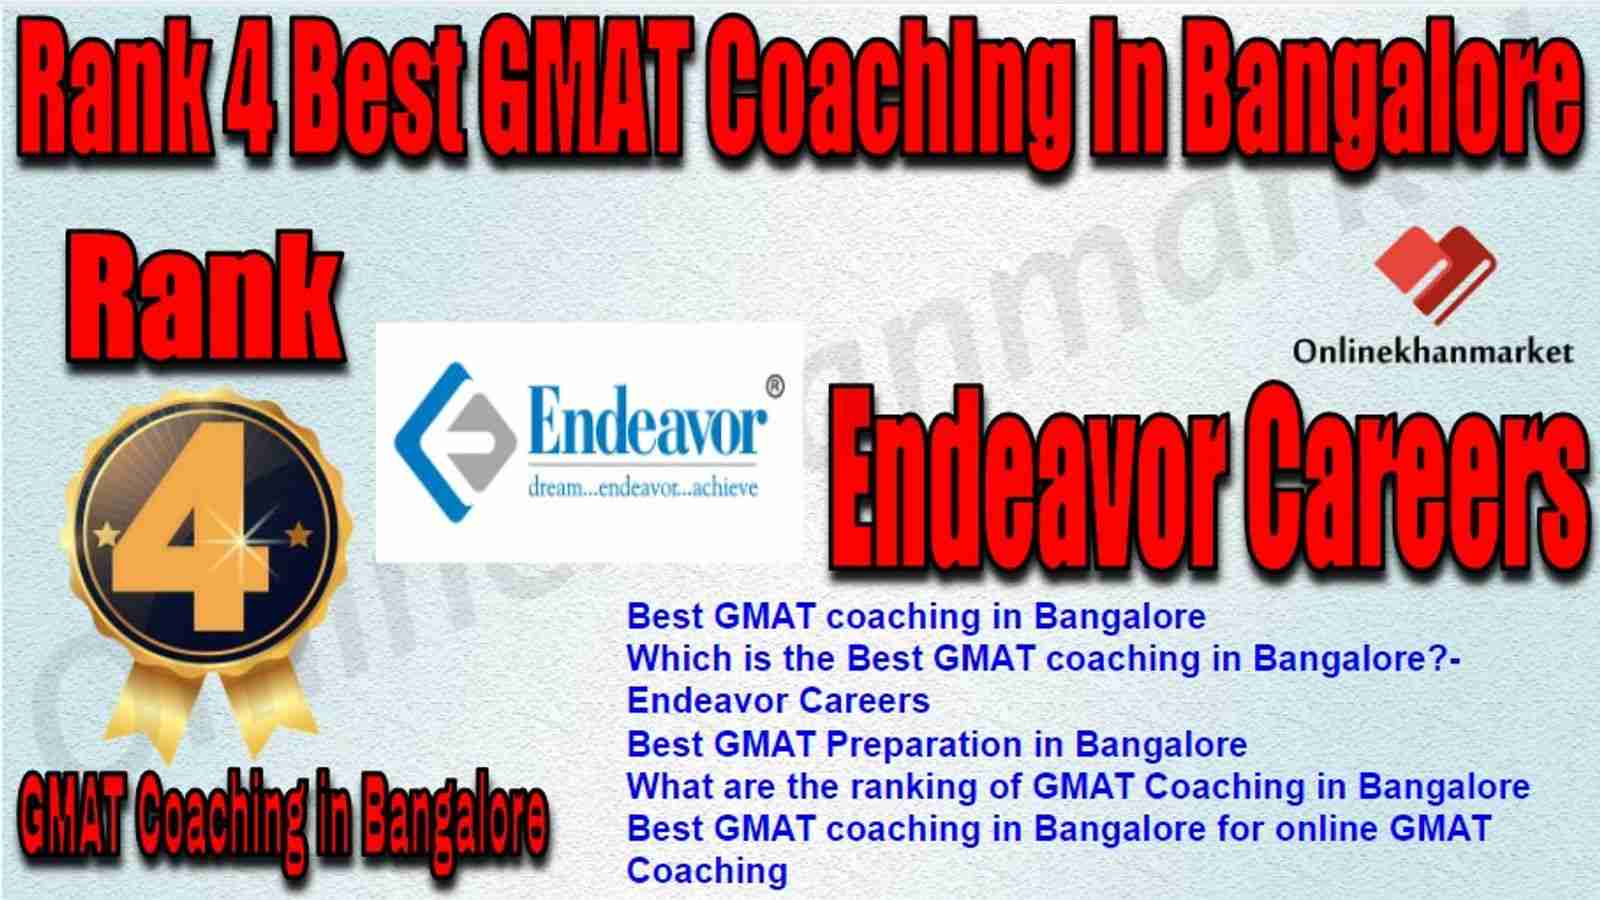 Rank 4 Best GMAT Coaching in Bangalore